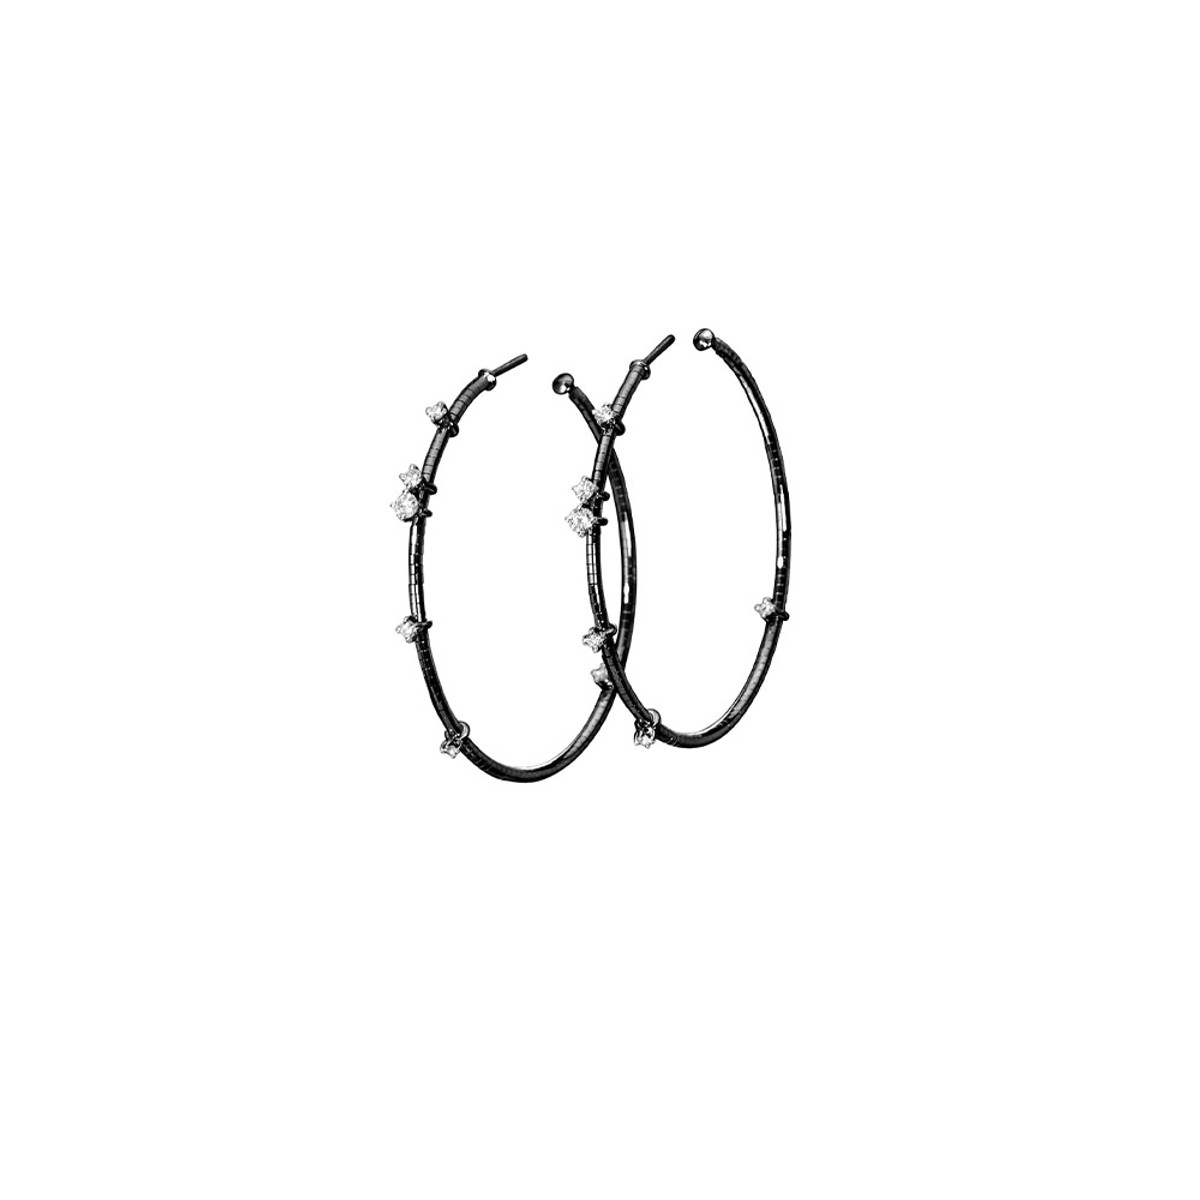 Mattia Cielo 18k Black Gold & Titanium Diamond Hoop Earrings-67255 Product Image